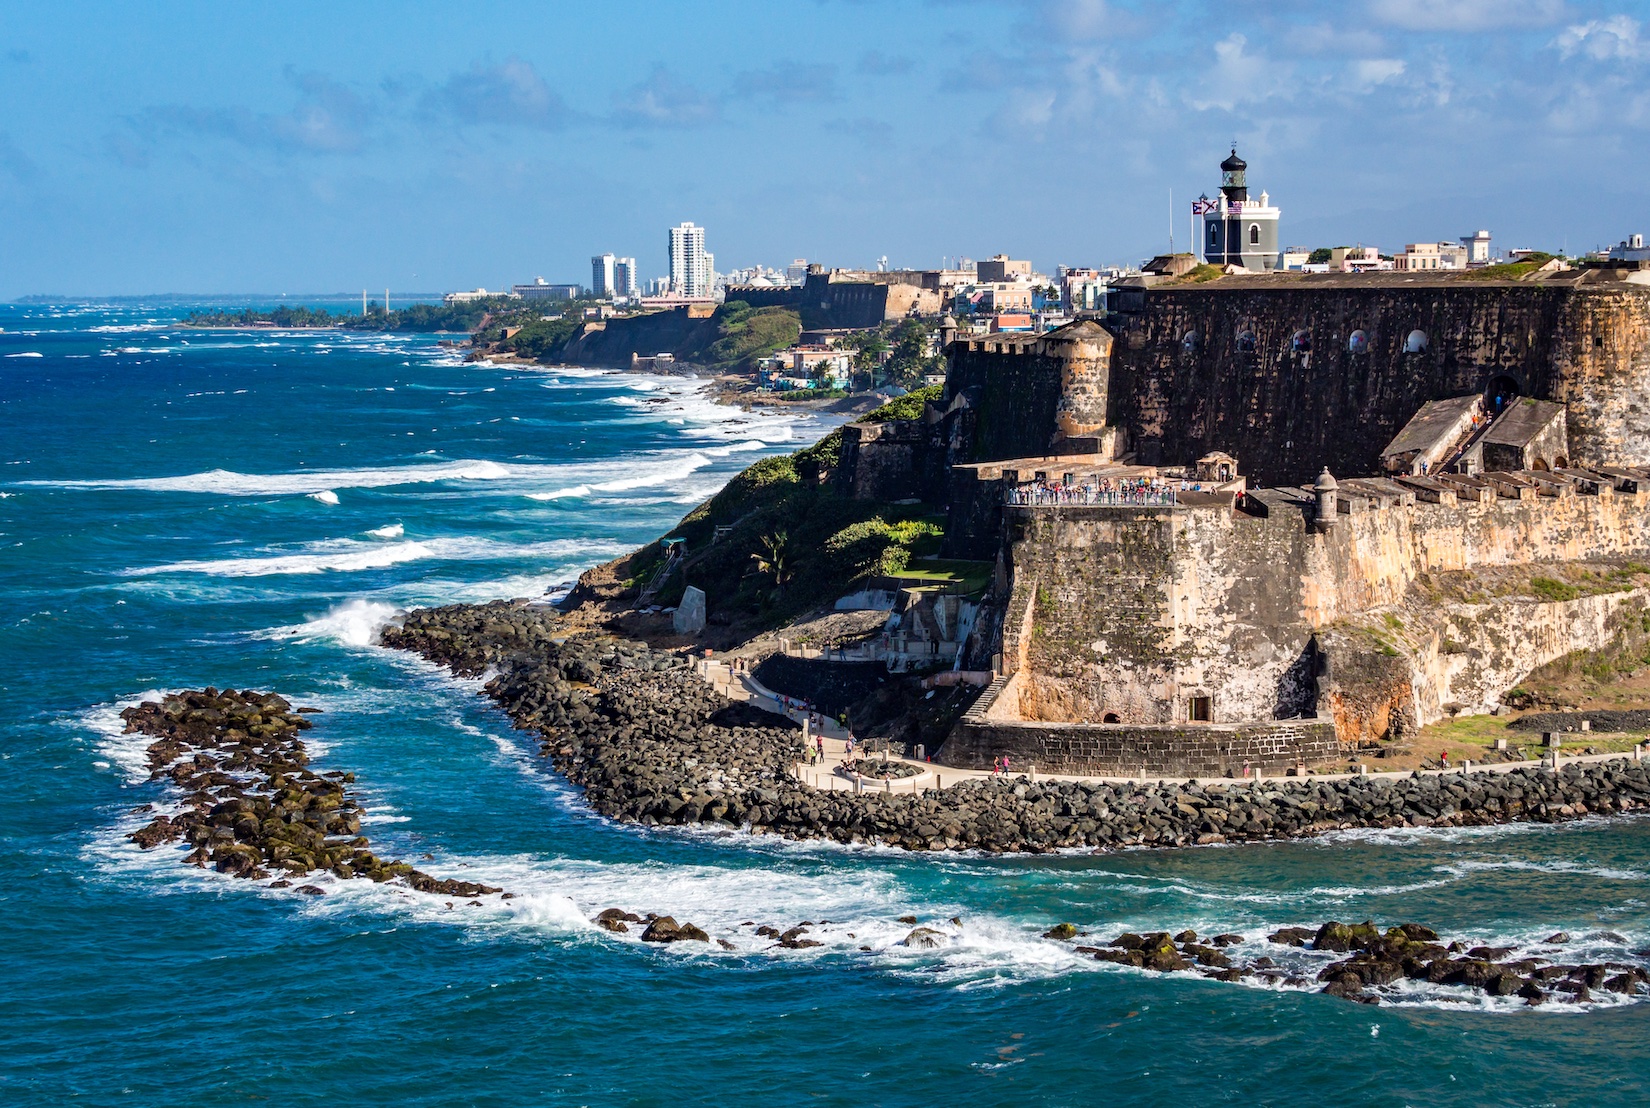 El Morro: Havana's Richest Historical Landmark